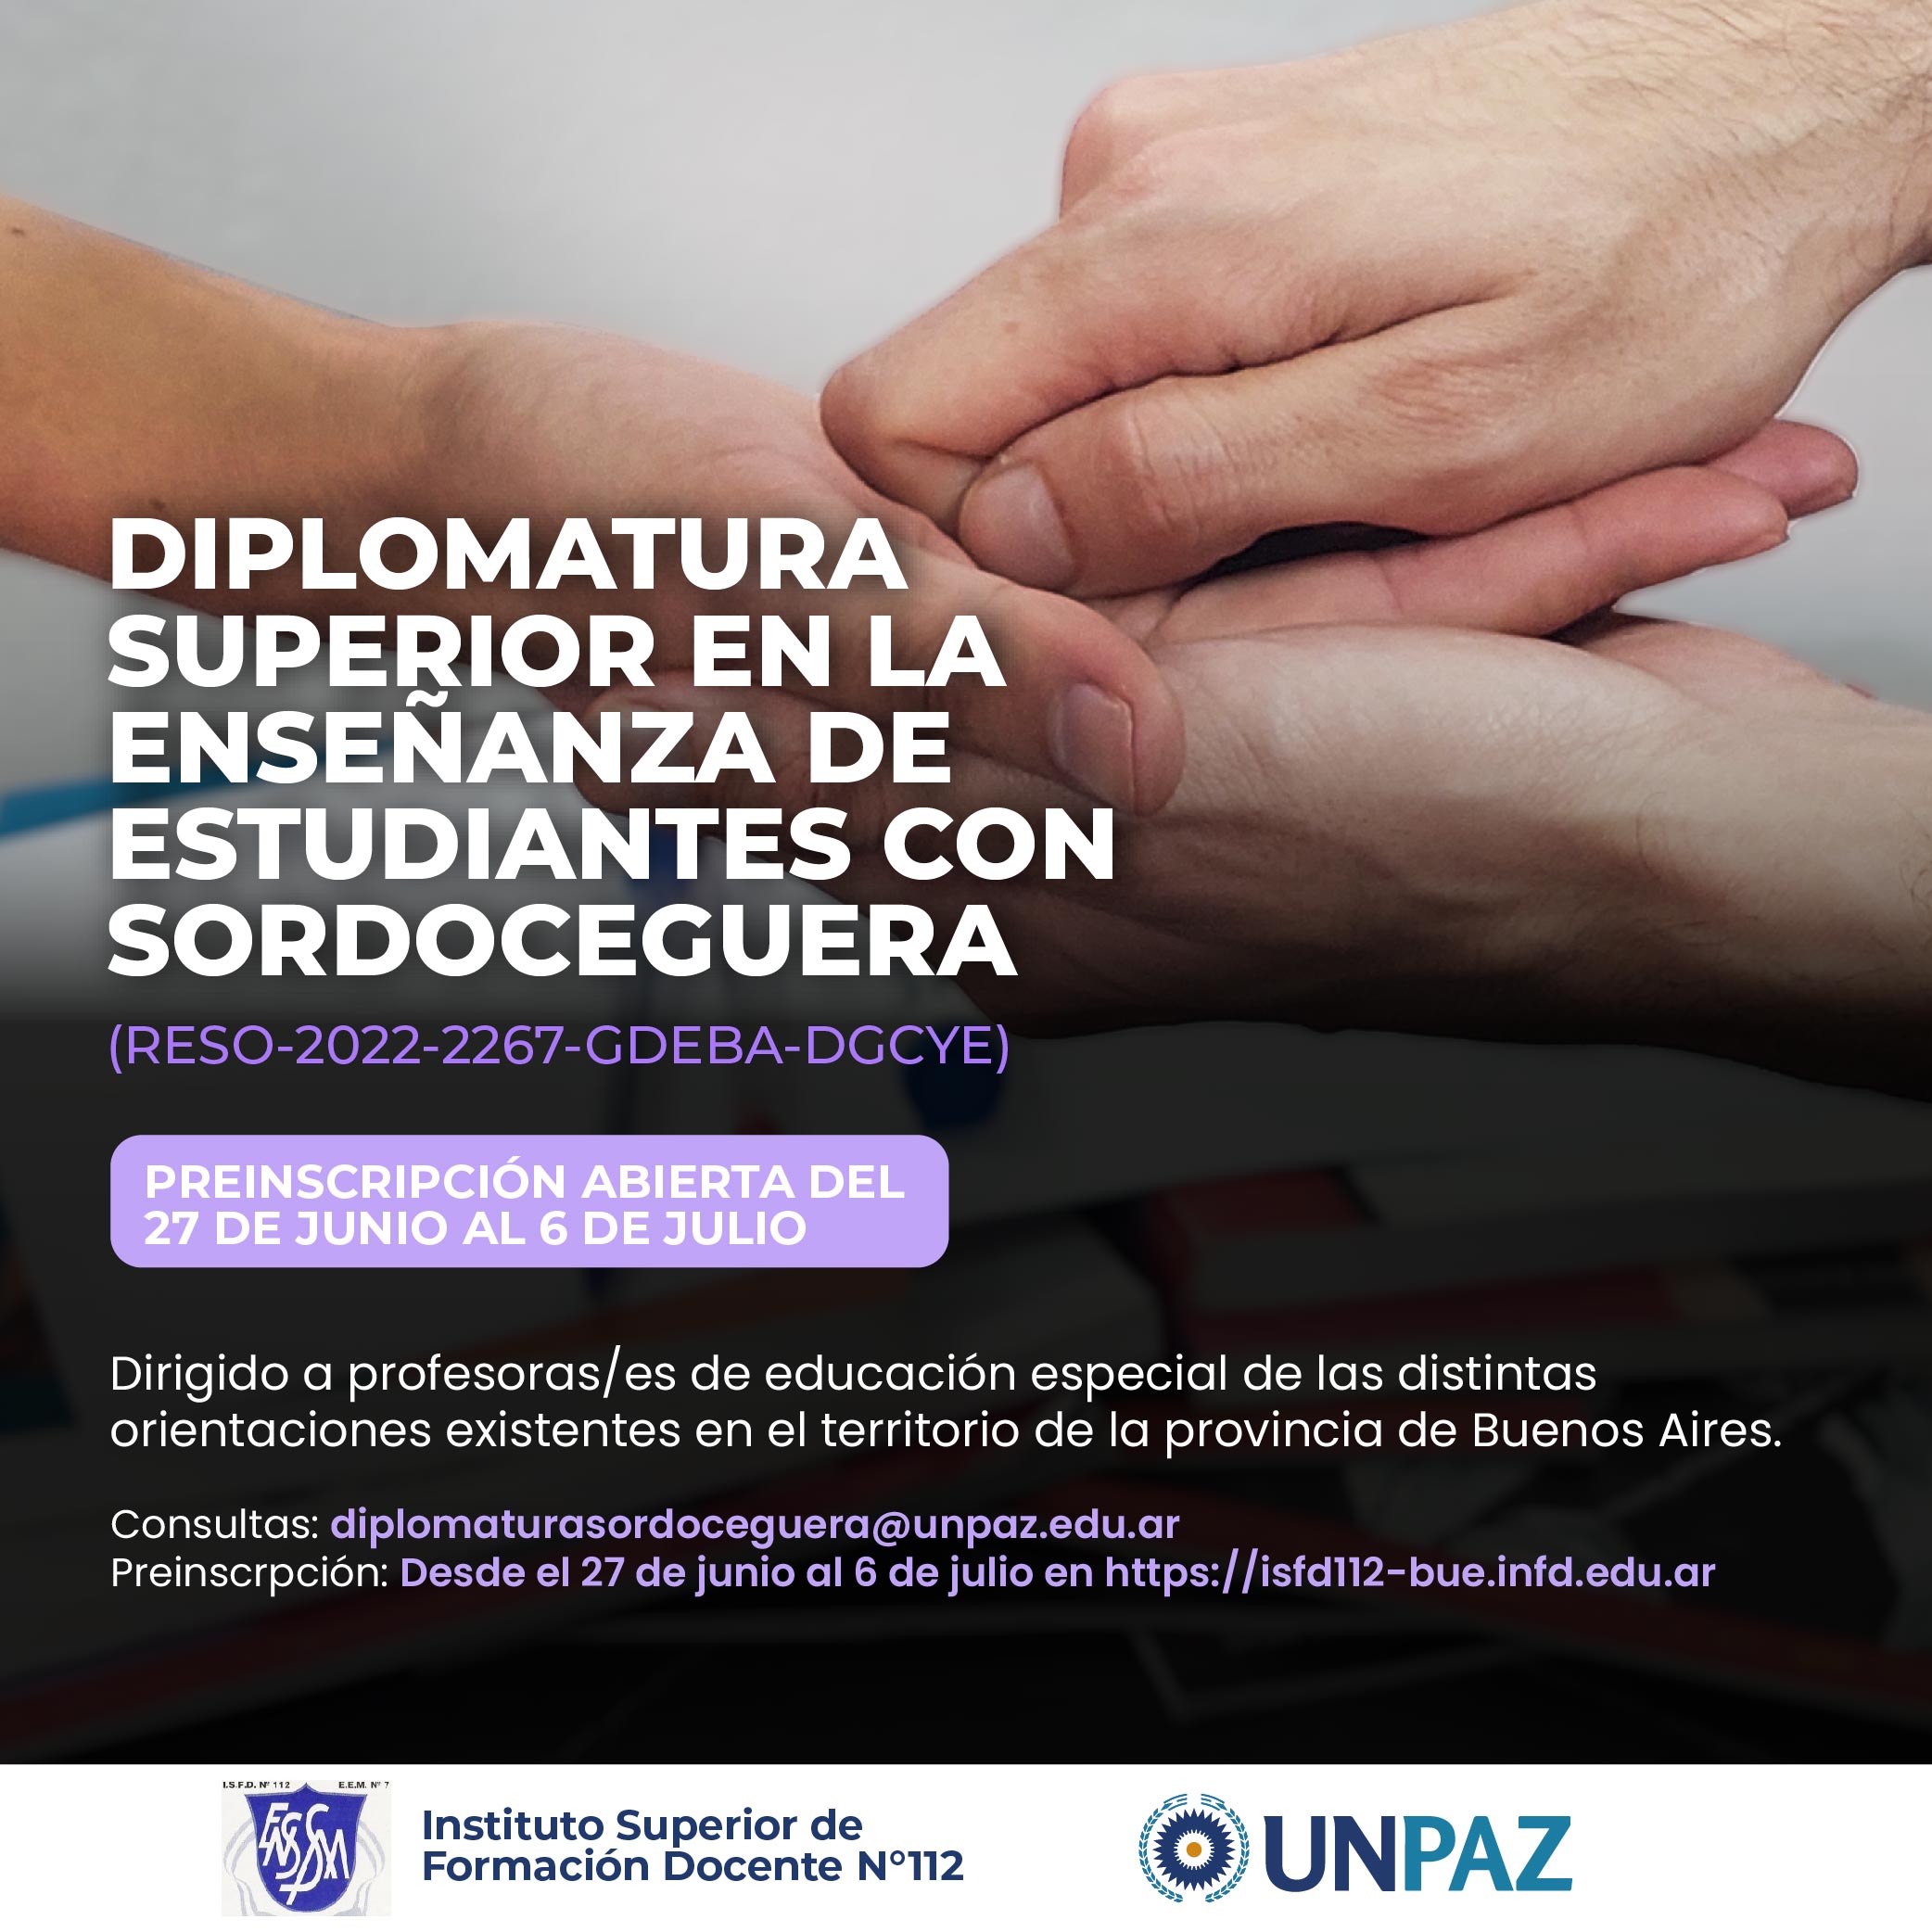 Diplomatura Superior en la enseñanza de estudiantes con Sordoceguera (RESO-2022-2267-GDEBA-DGCYE)